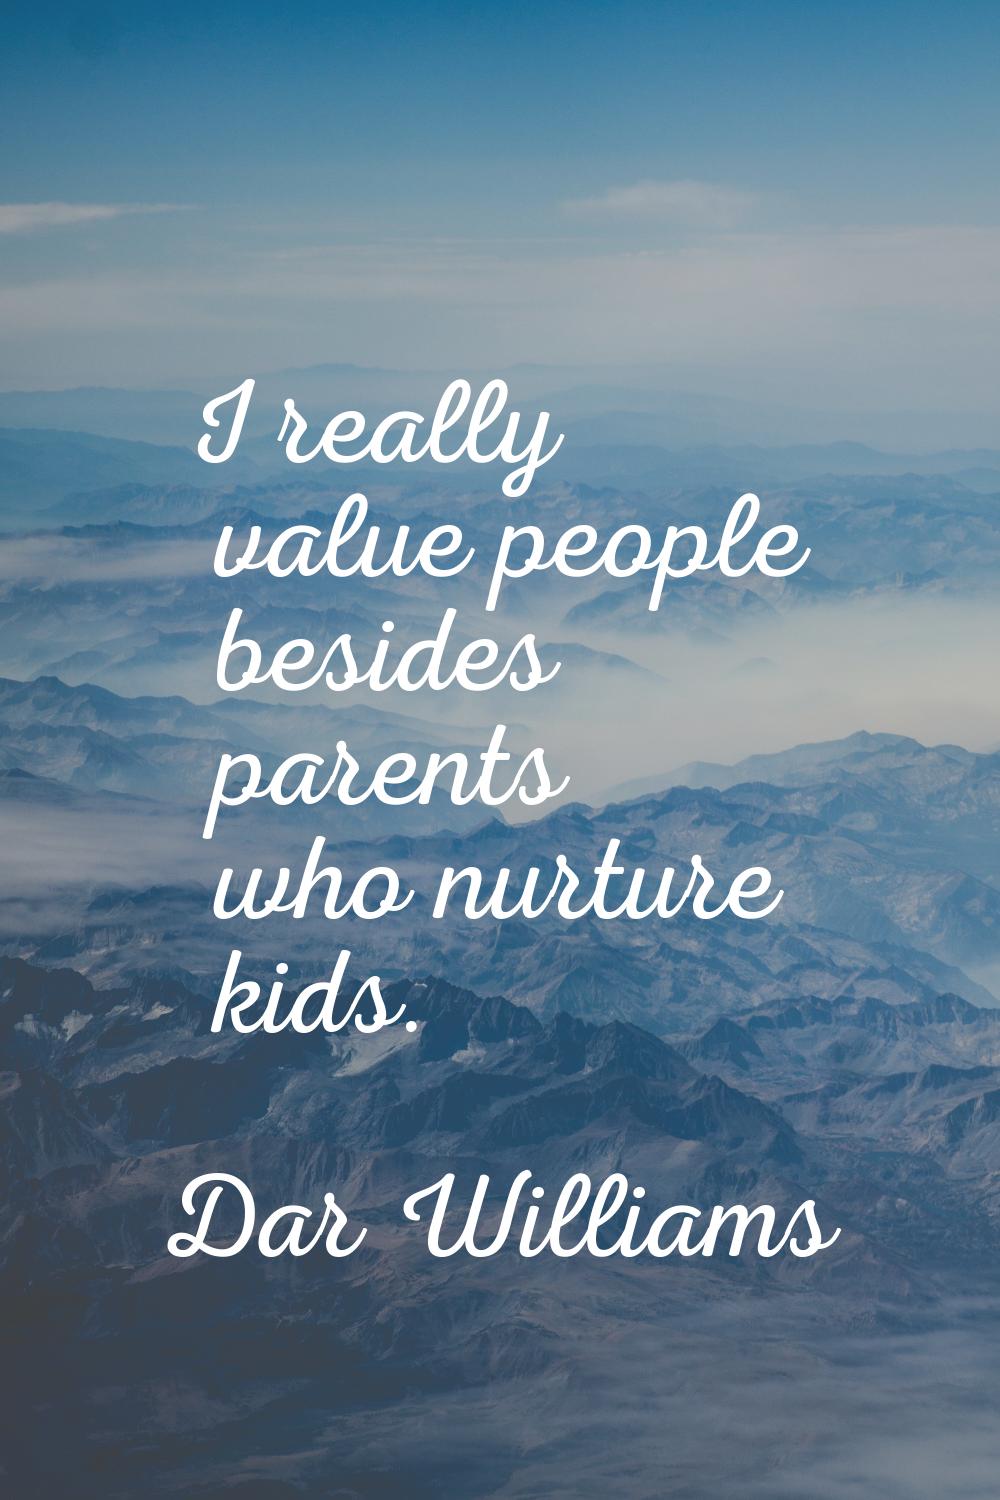 I really value people besides parents who nurture kids.